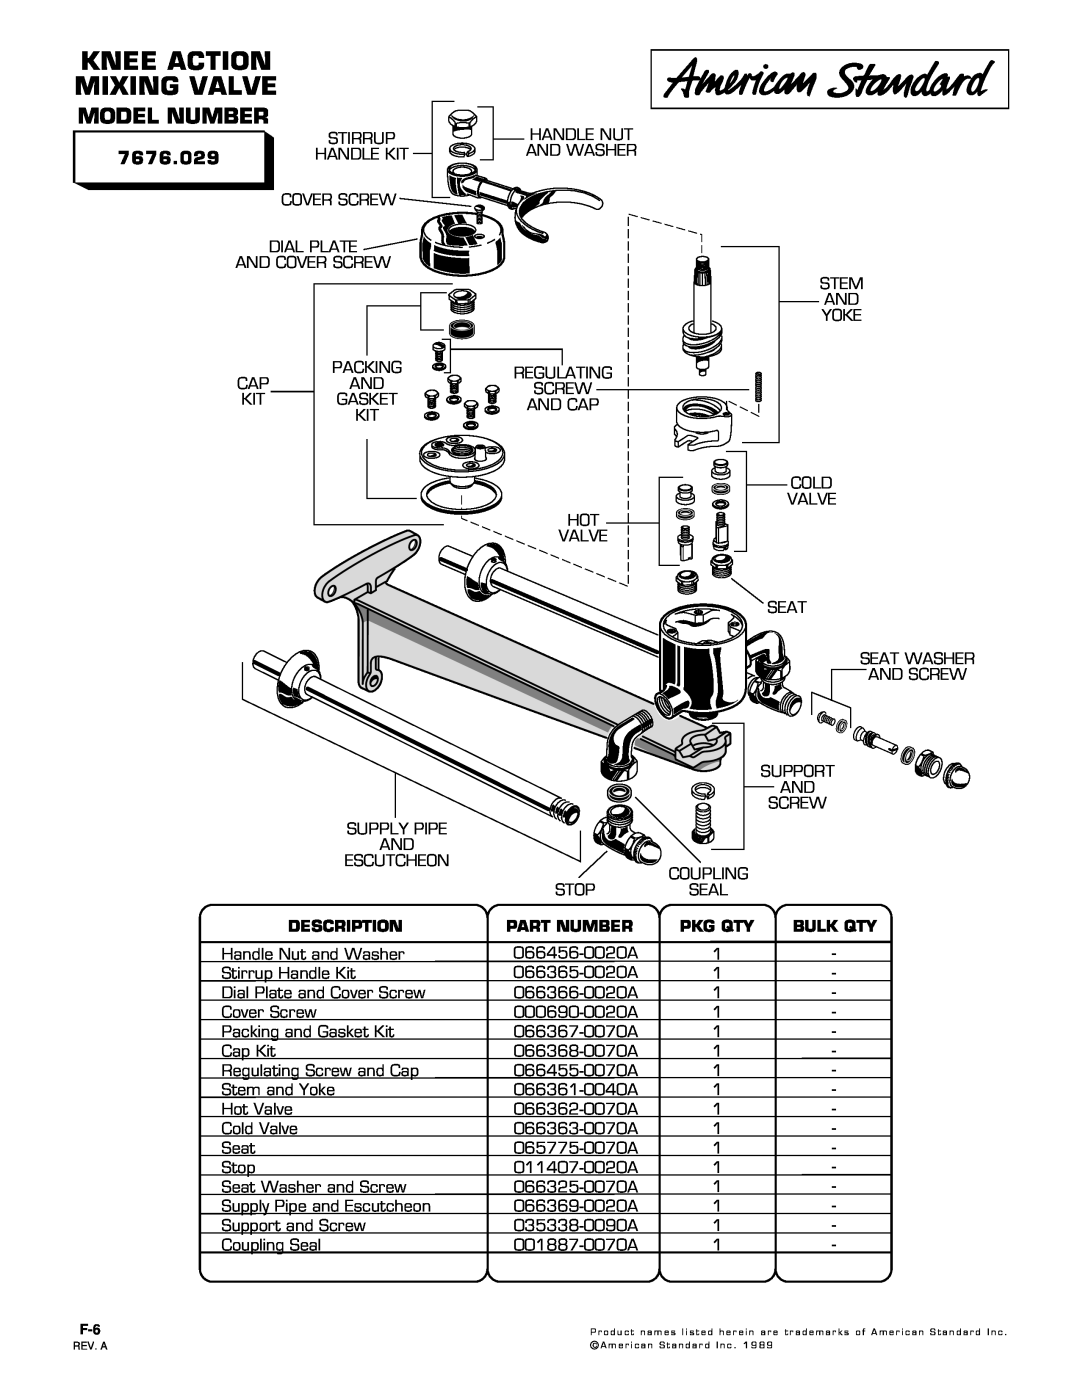 American Standard 7676.029 manual Knee Action Mixing Valve, Model Number, Description, Part Number, Pkg Qty, Bulk Qty 